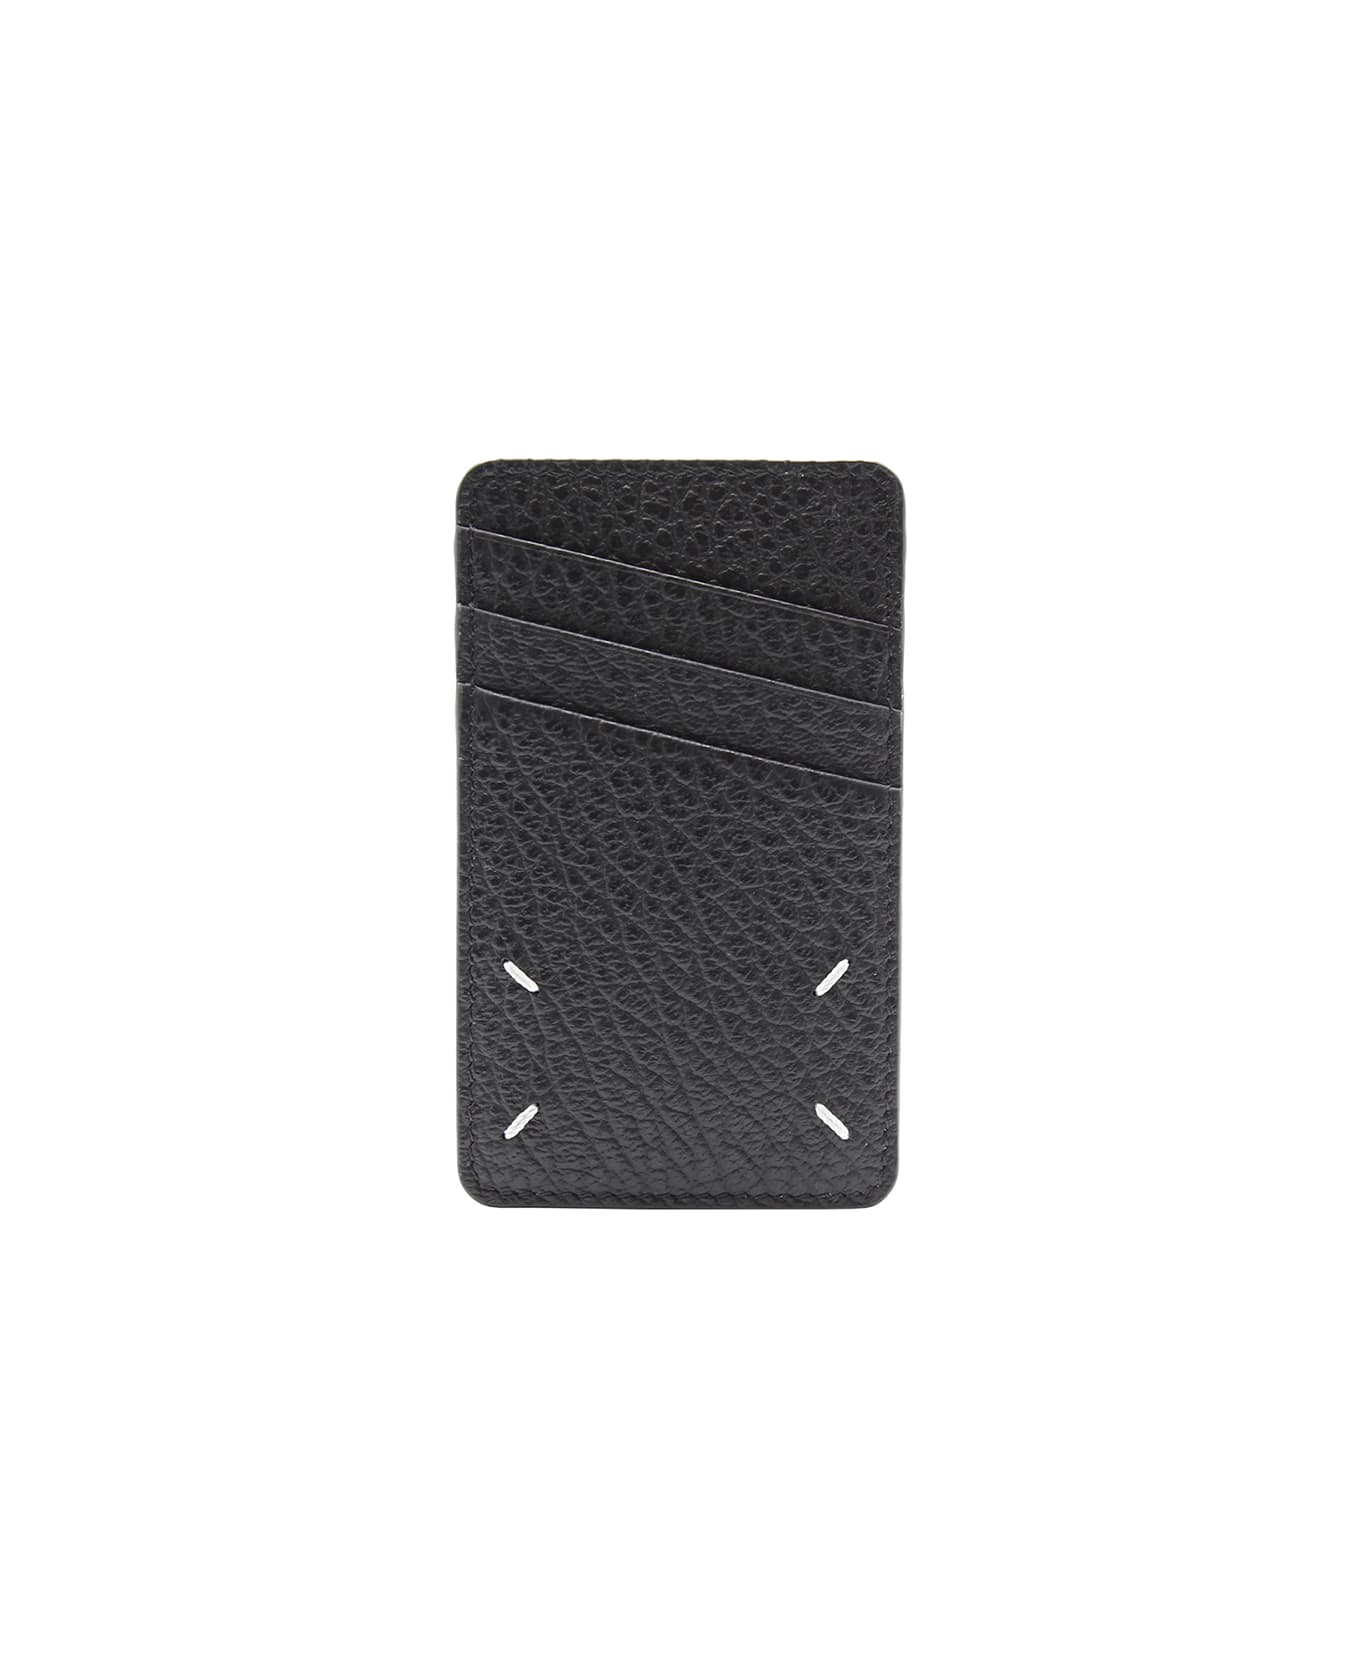 Maison Margiela Four Stitches Cards Holder - Black 財布